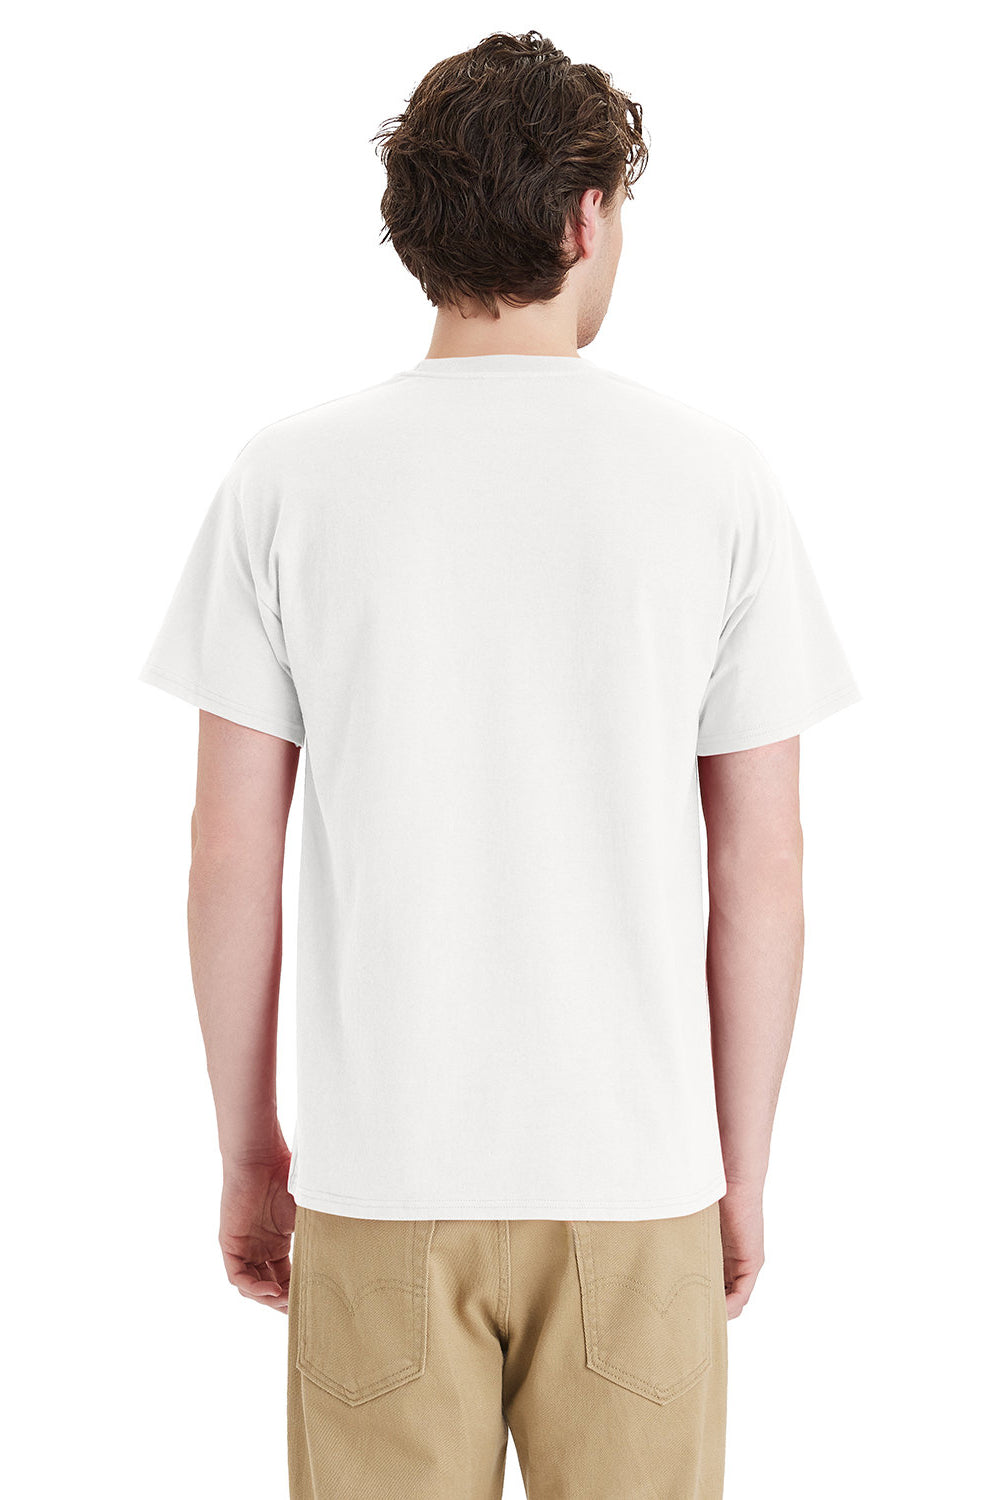 Hanes 5290P Mens Essential Short Sleeve Crewneck T-Shirt w/ Pocket White Model Back